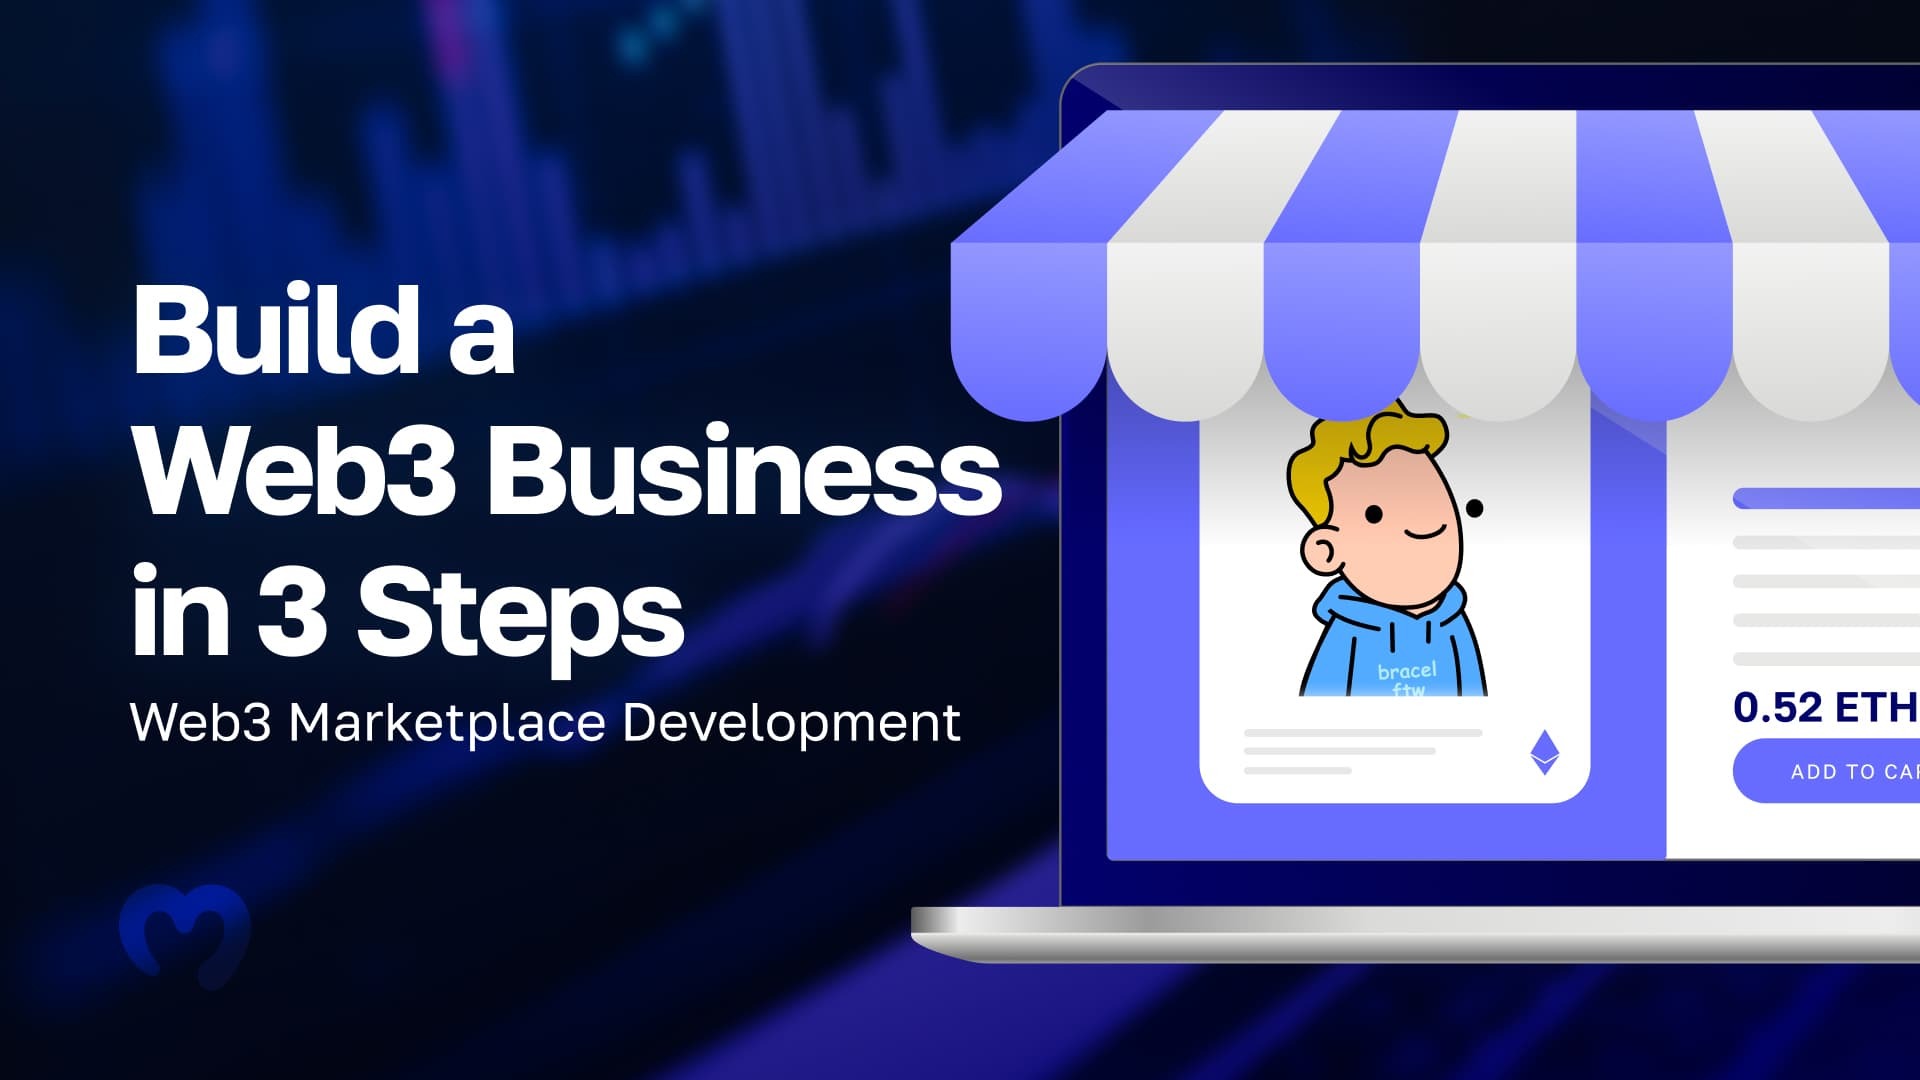 Web3 Marketplace Development - Build a Web3 Business in 3 Steps